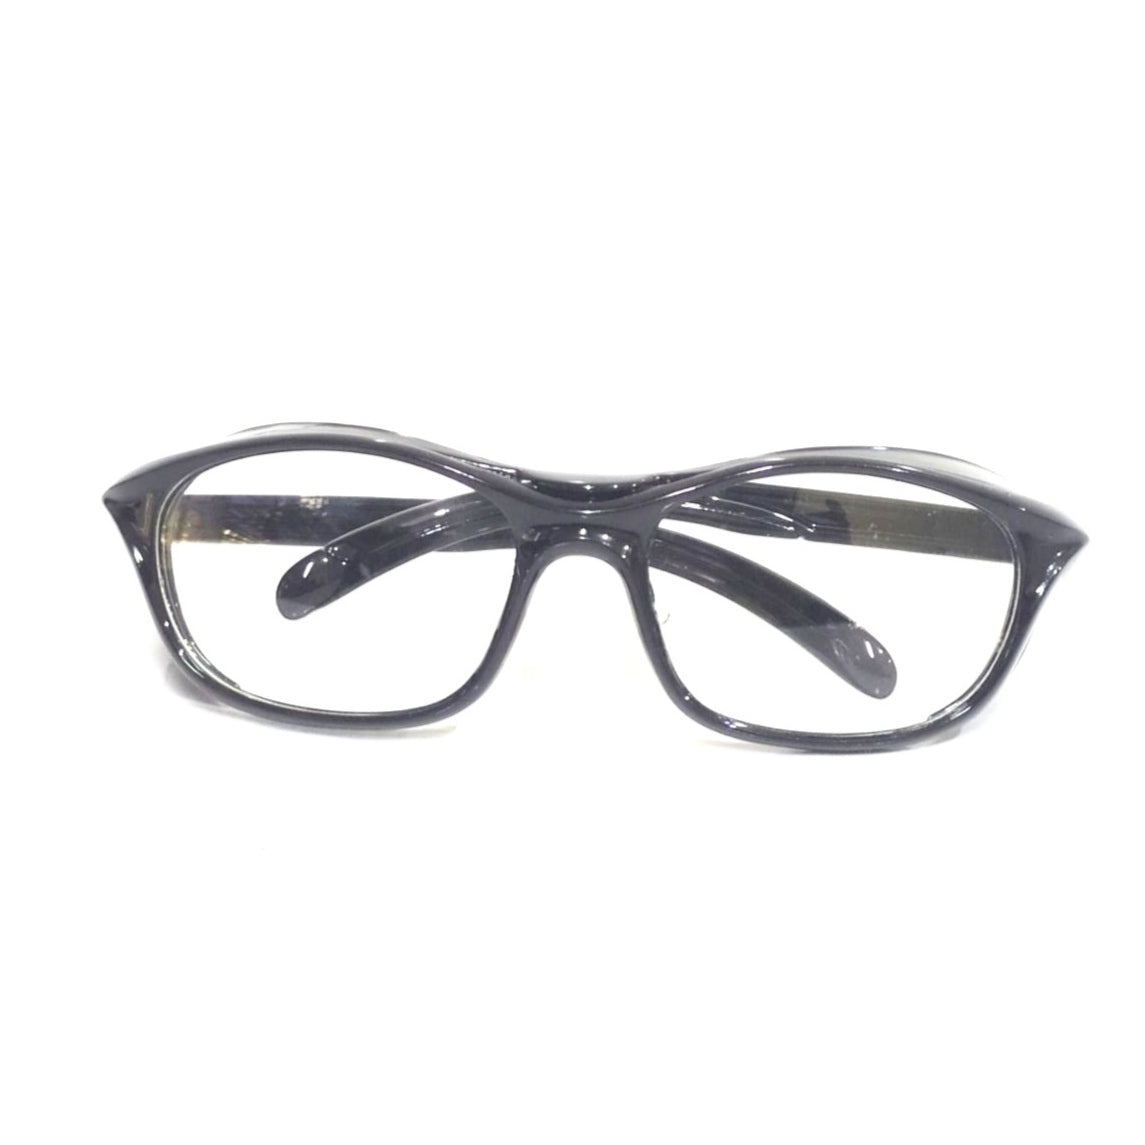 Black Frame Anti Fog Clear Lens Prescription Cycling Driving Glasses